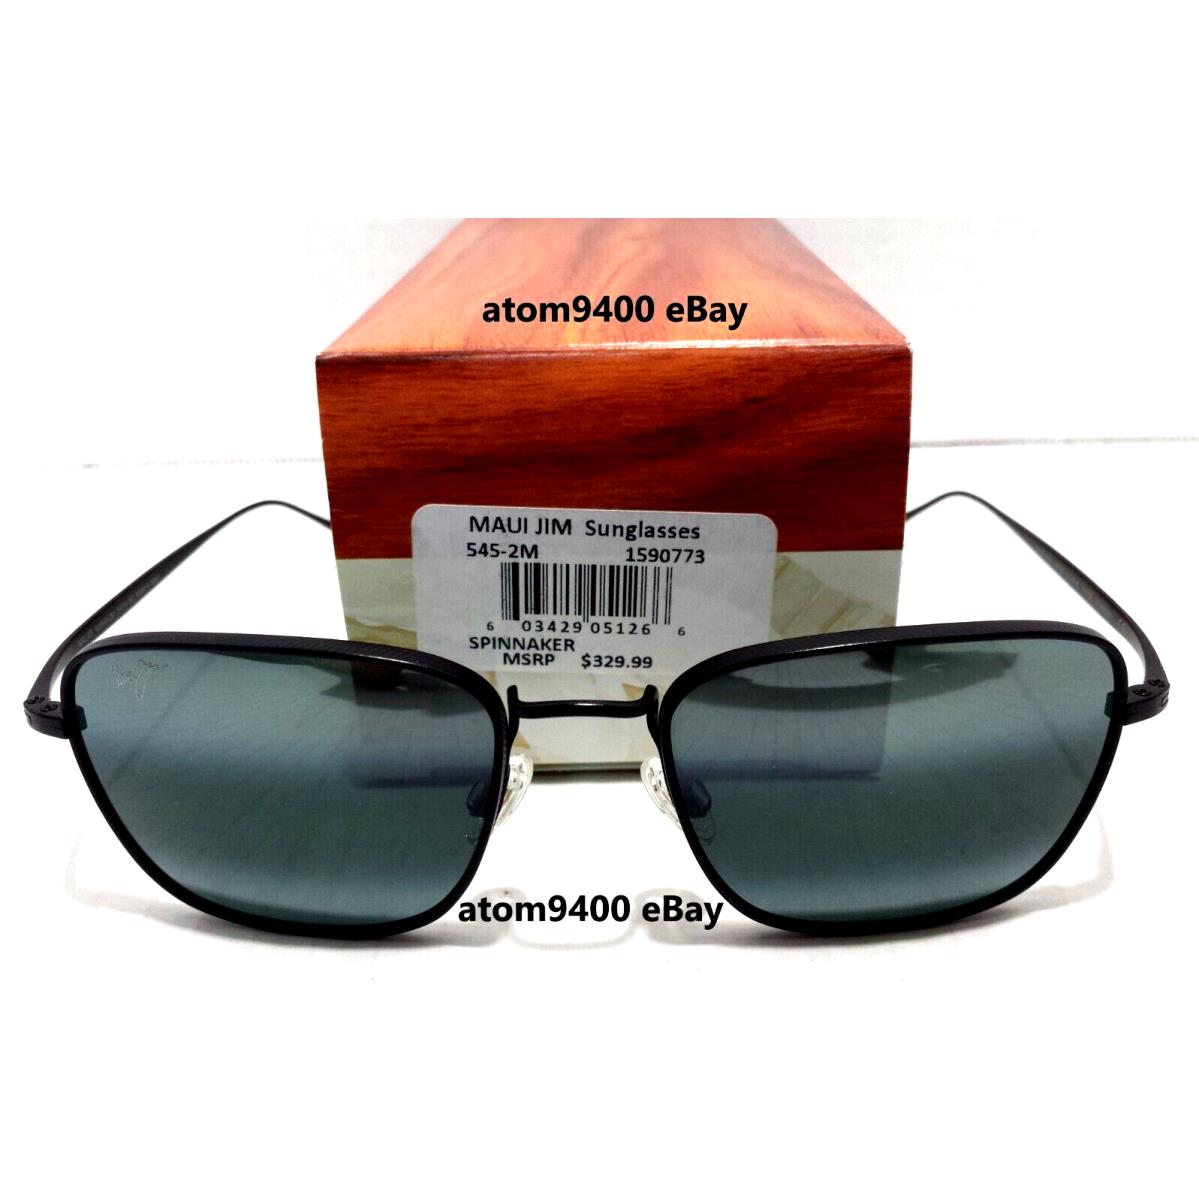 Maui Jim Spinnaker Aviator Sunglasses From Japan Titanium Black Frame Grey Lens